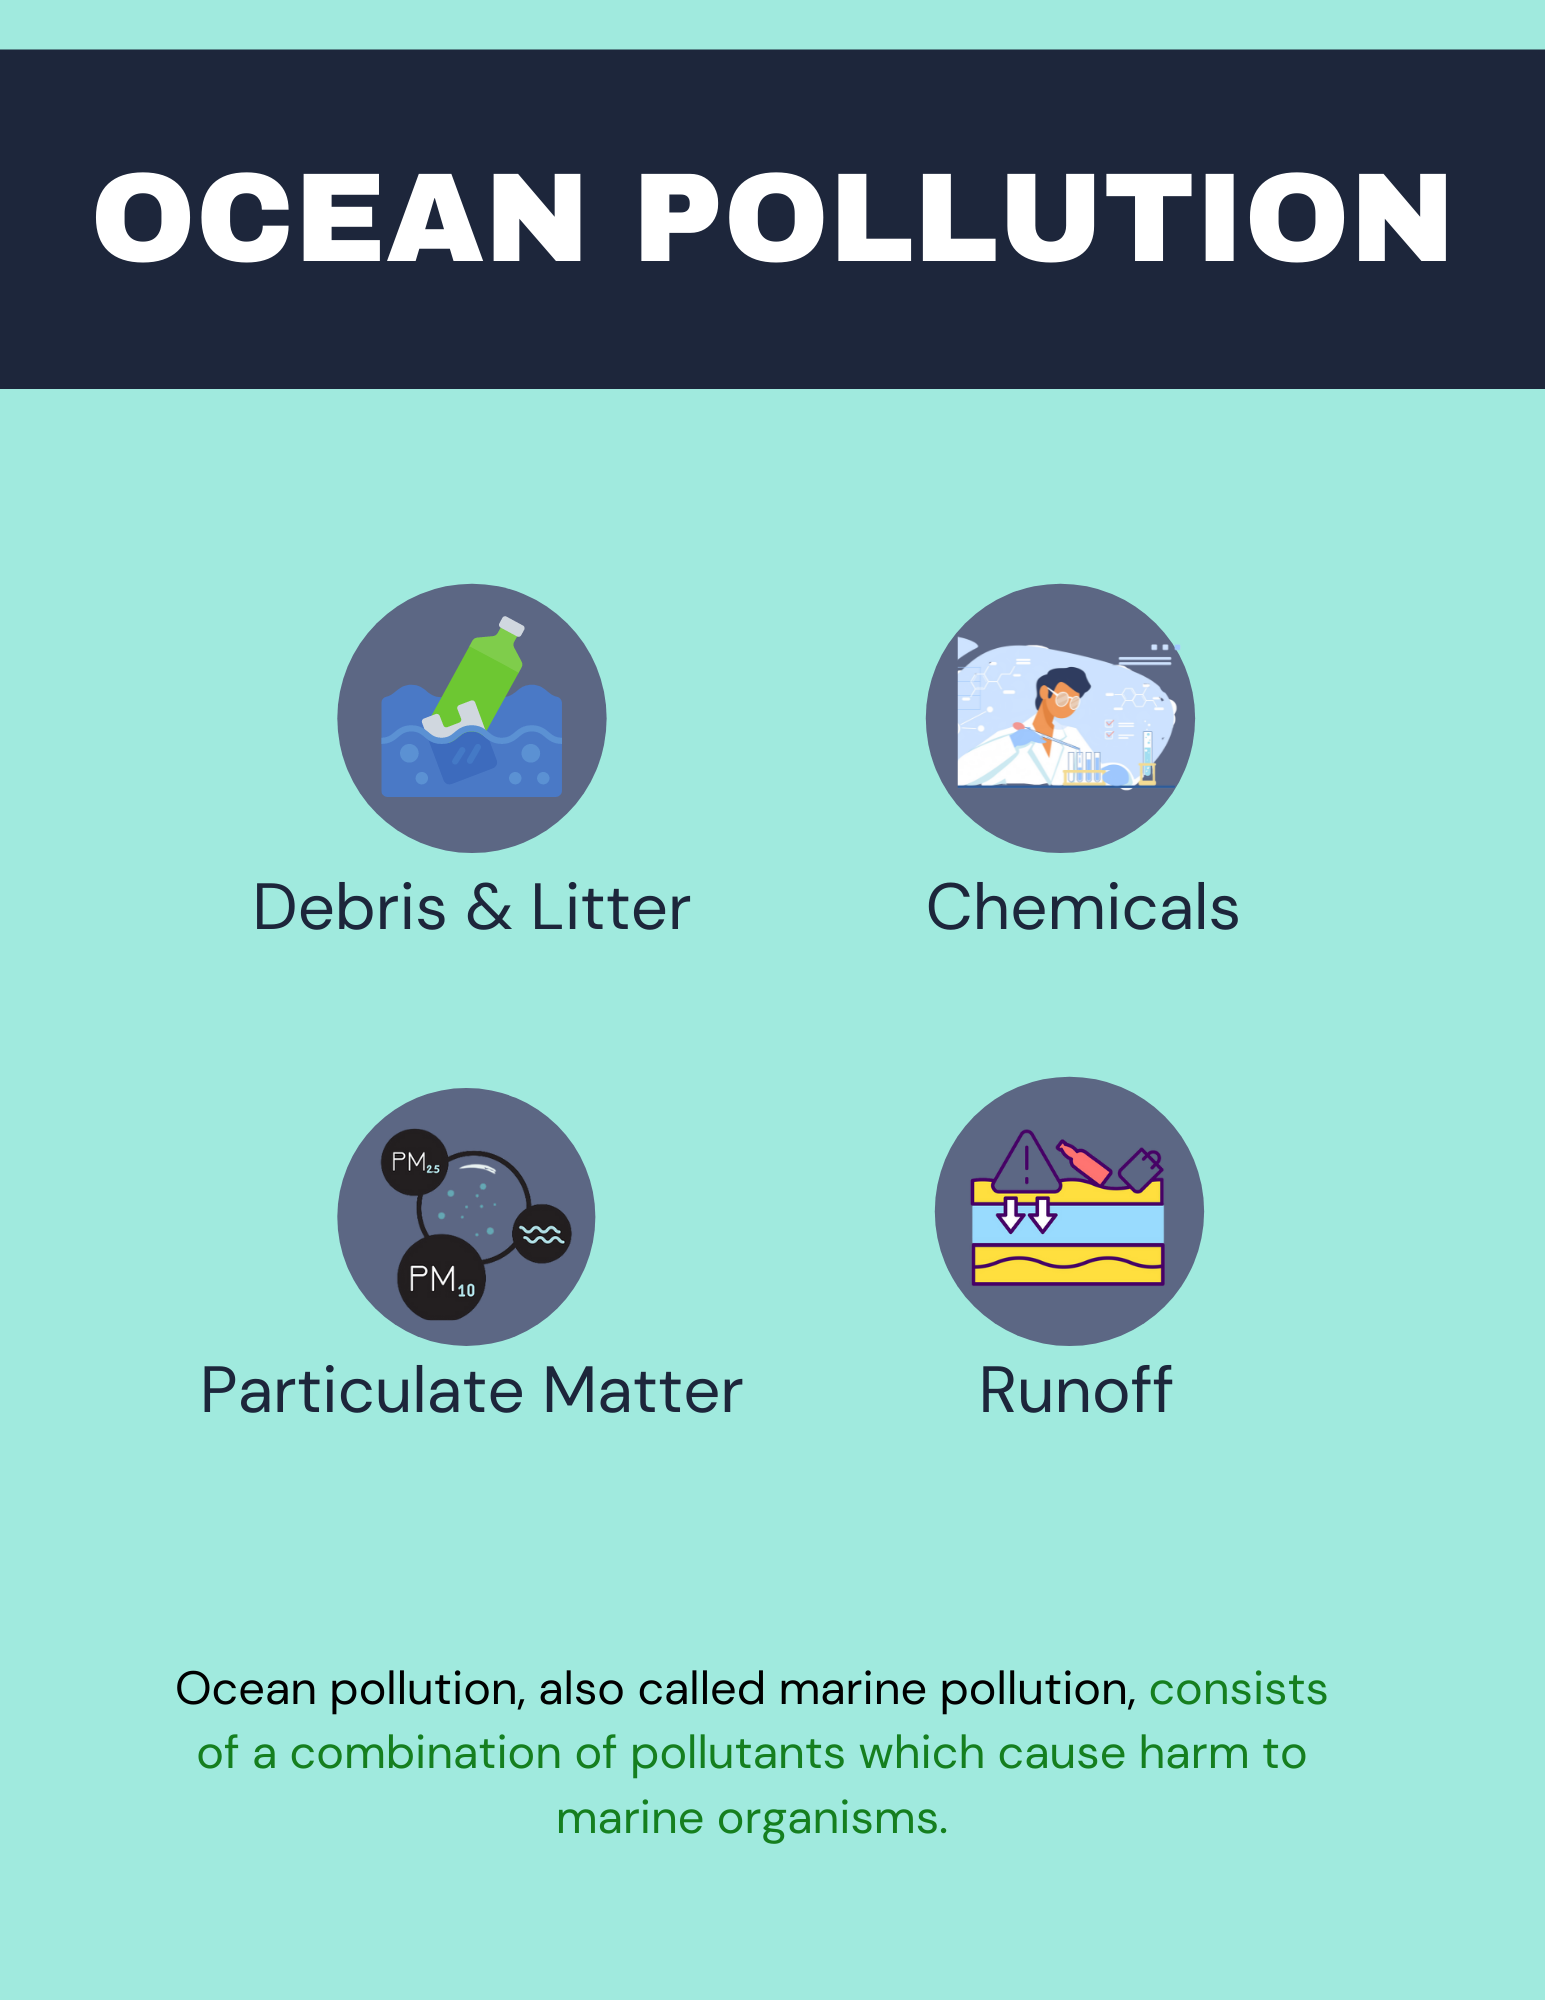 Types of Ocean Pollution